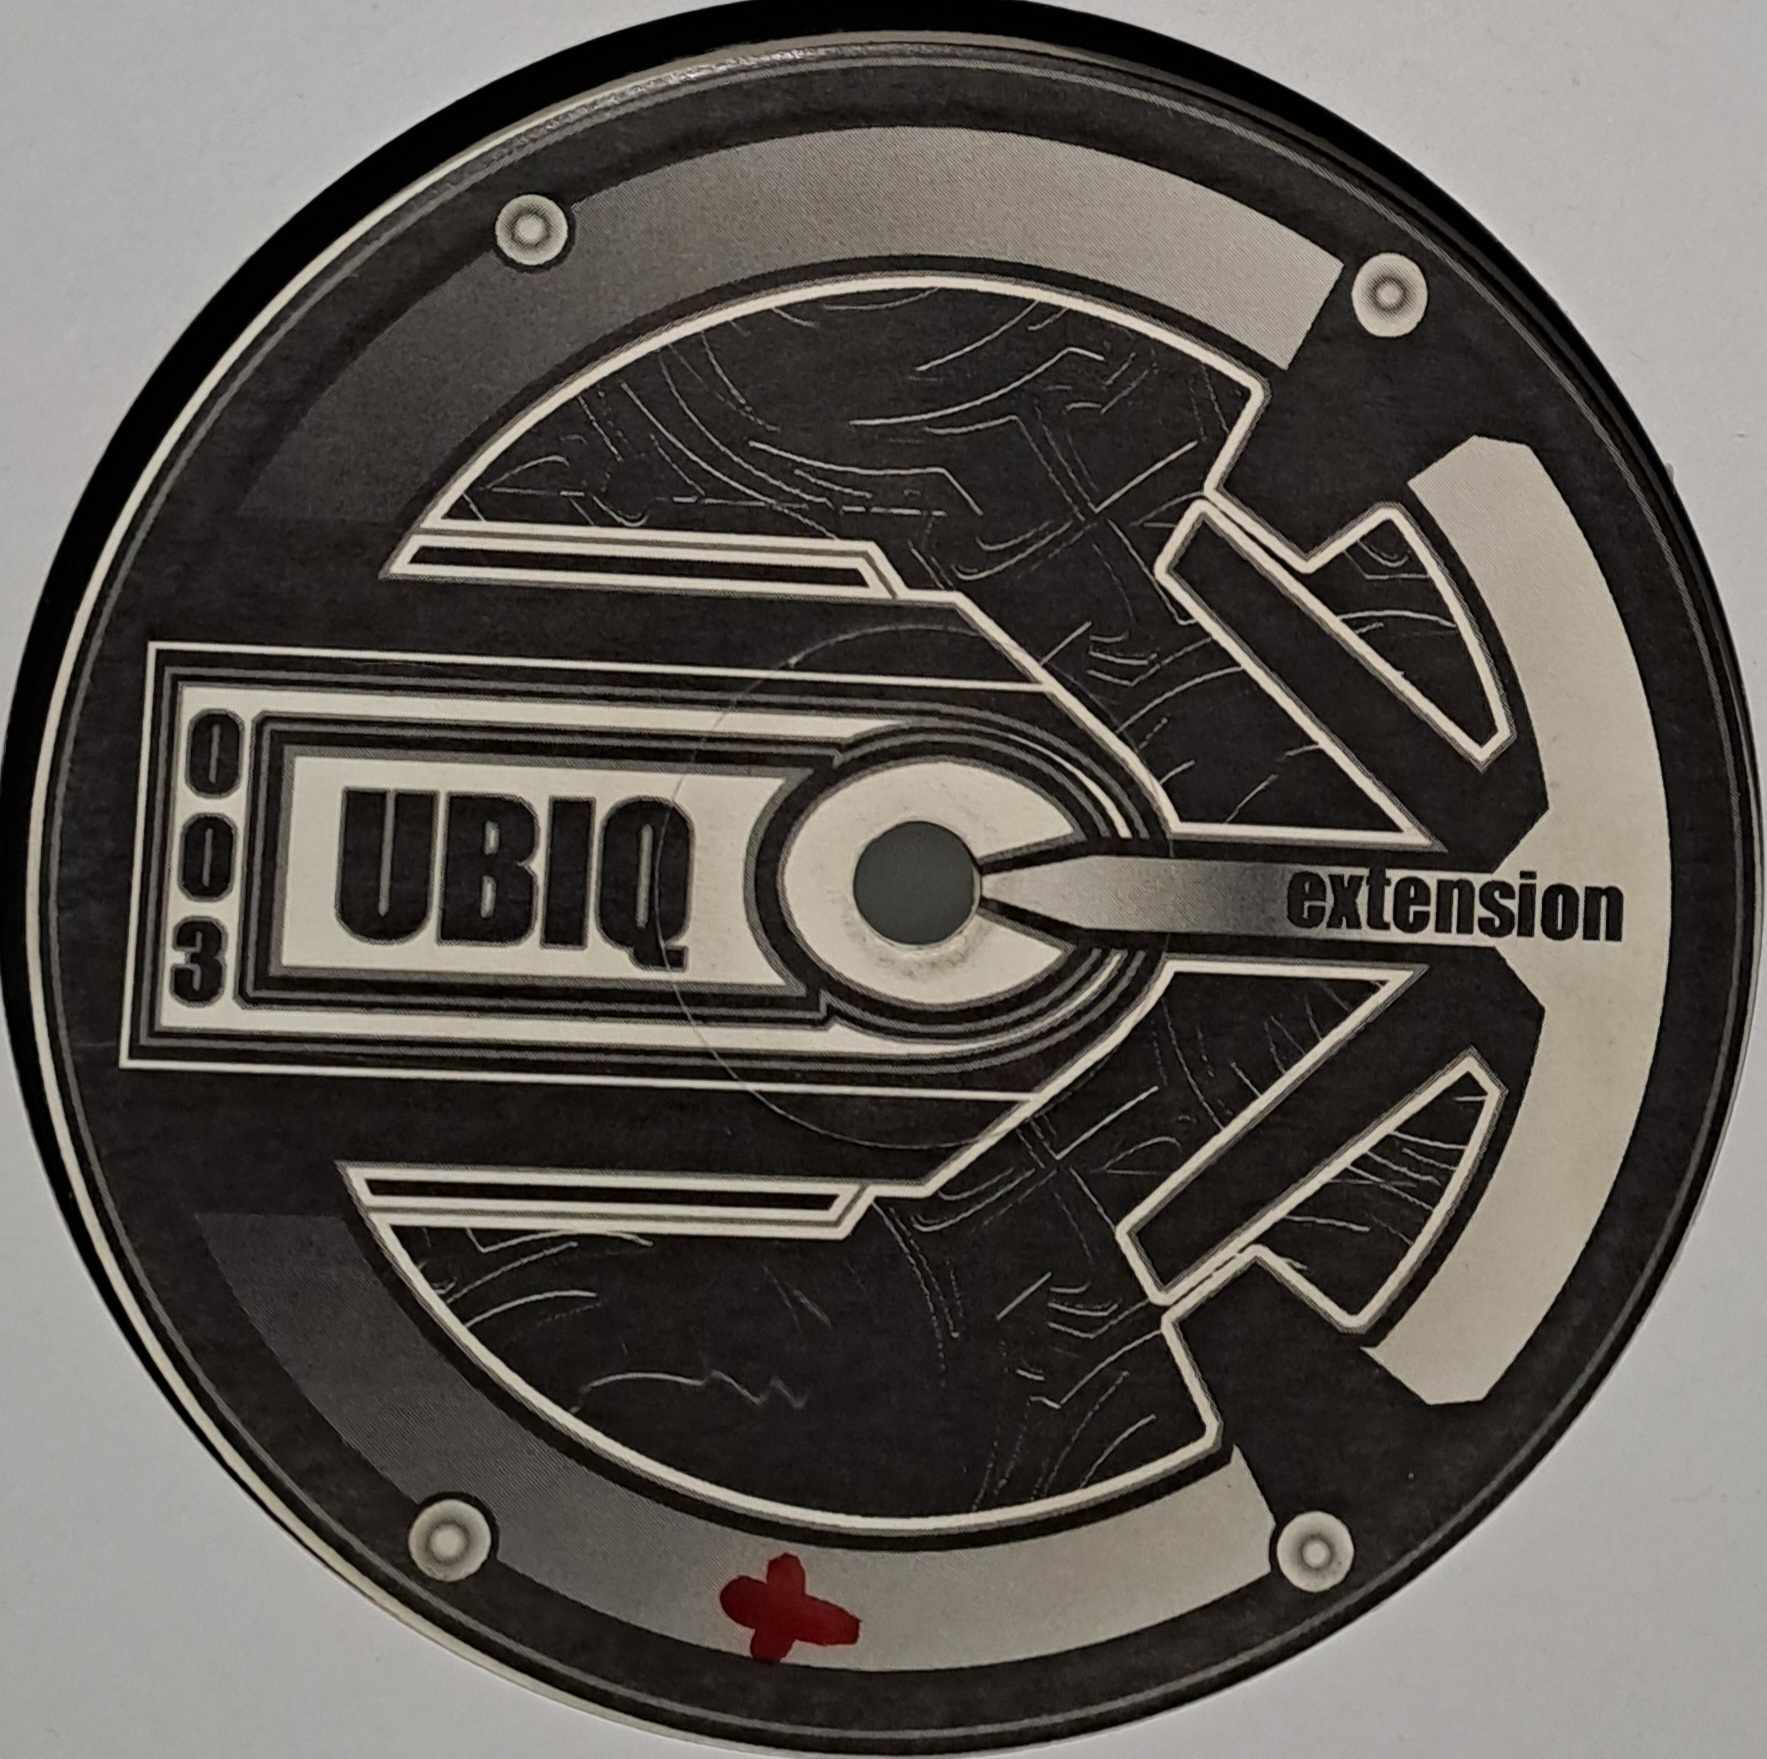 Ubiq Extension 03 - vinyle freetekno